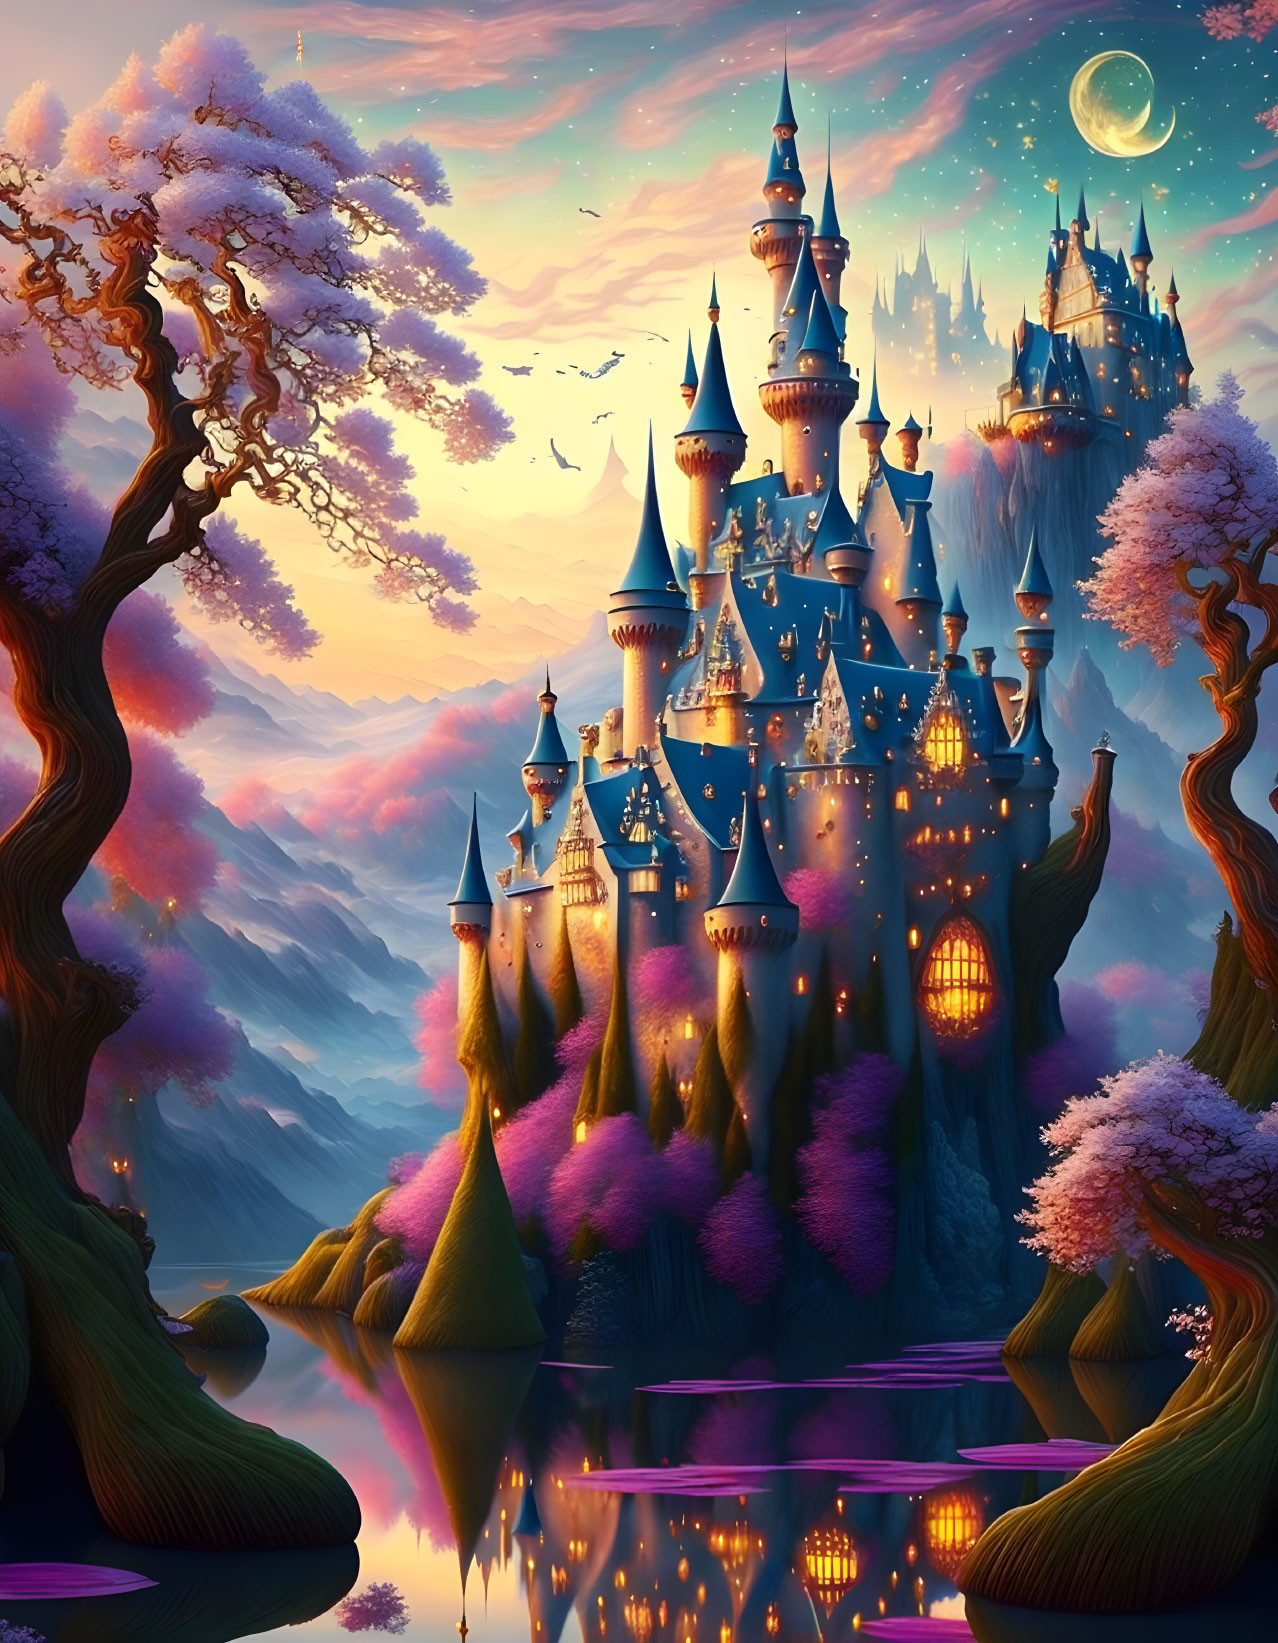 Fantastical castle in colorful dreamlike landscape